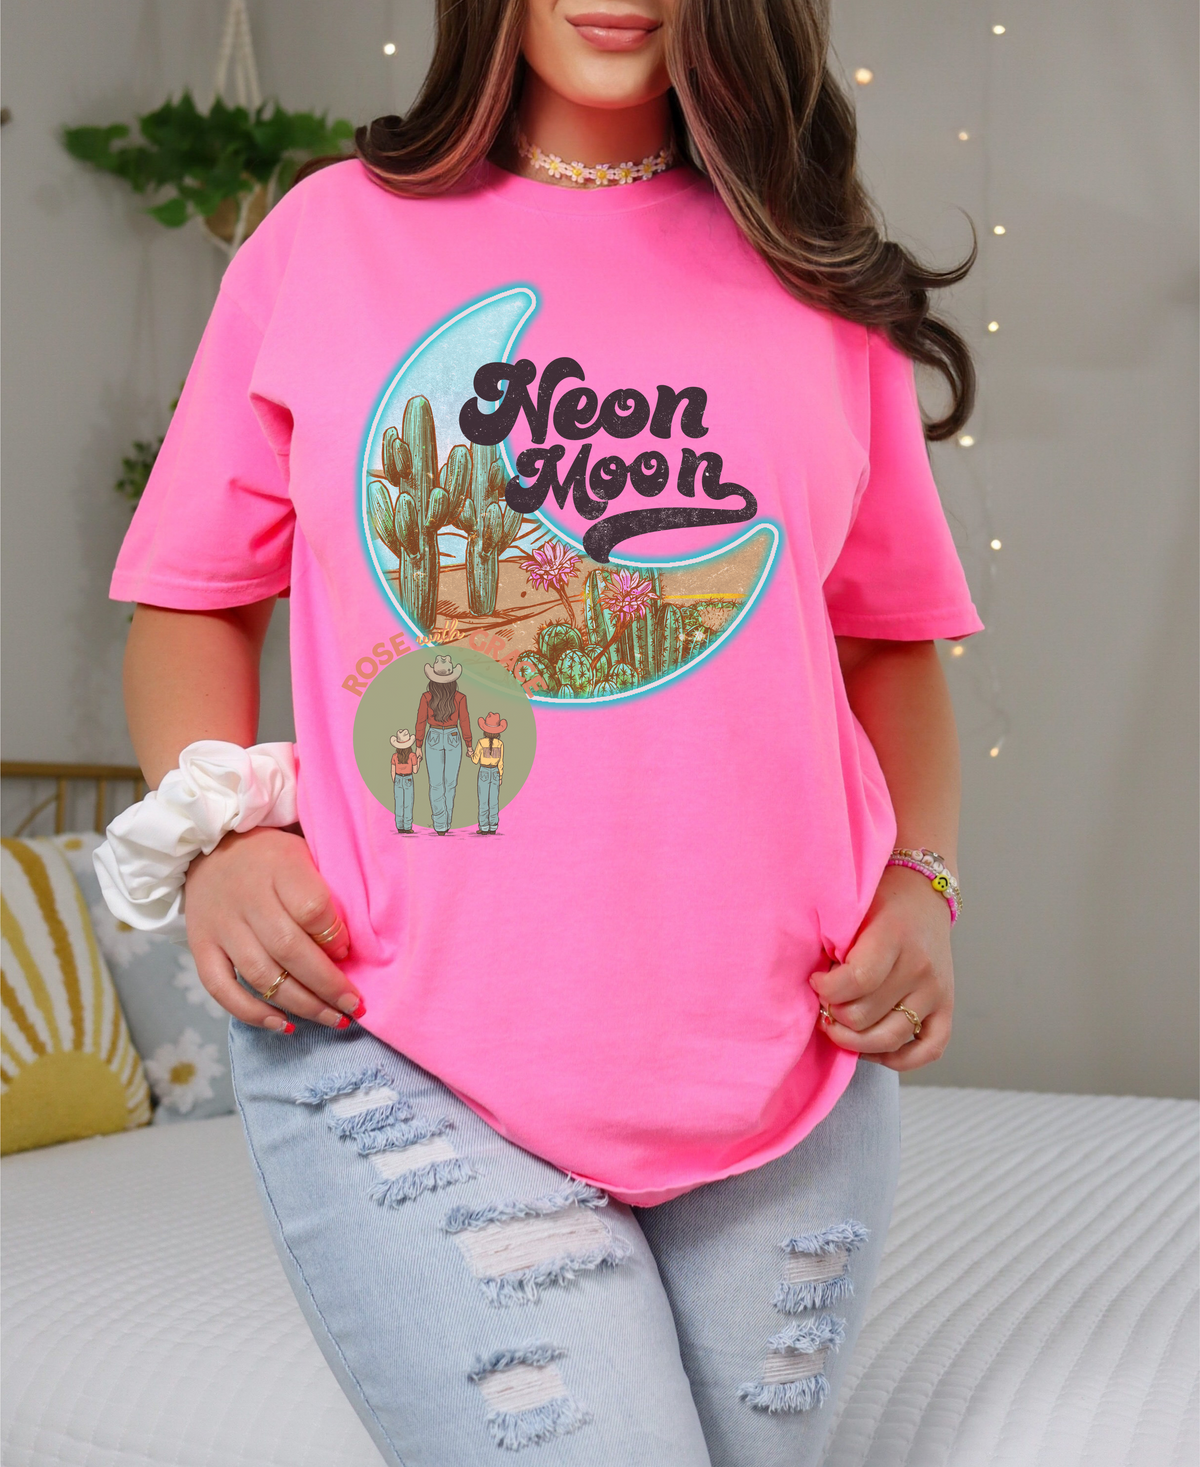 Neon Moon -Shirt or Sweatshirt *YOU PICK COLOR*